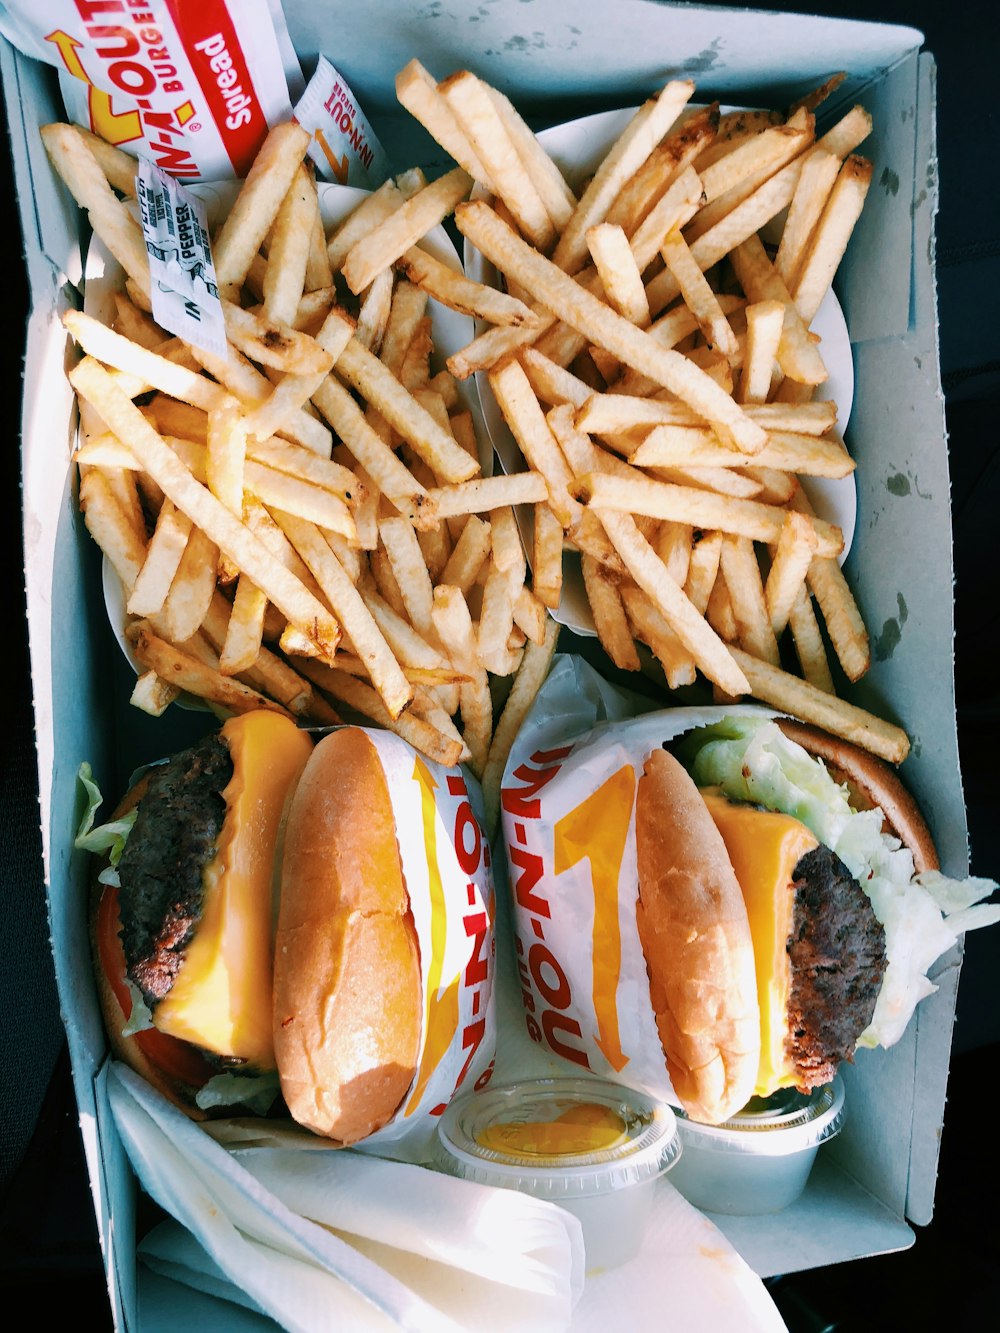 Burger and fries on brown paper bag photo – Free Burger Image on Unsplash